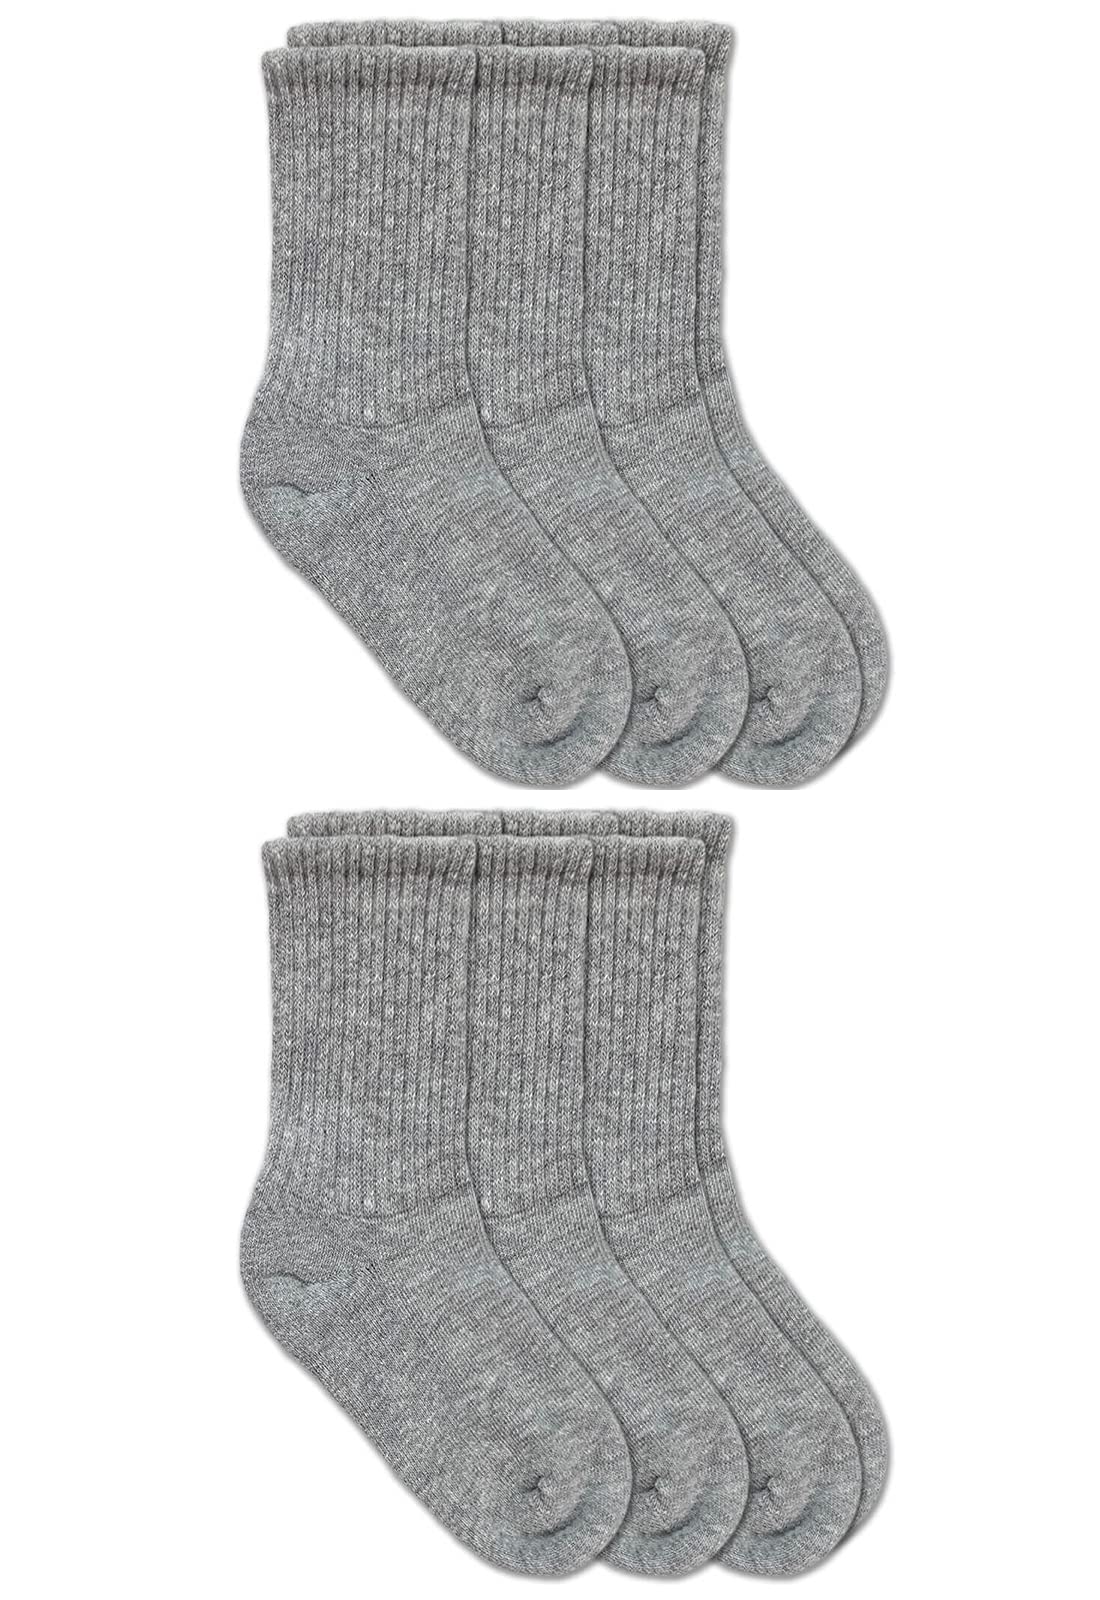 Jefferies Socks Boys' Little Seamless Half Cushion Sport Crew Socks 6 Pair Pack